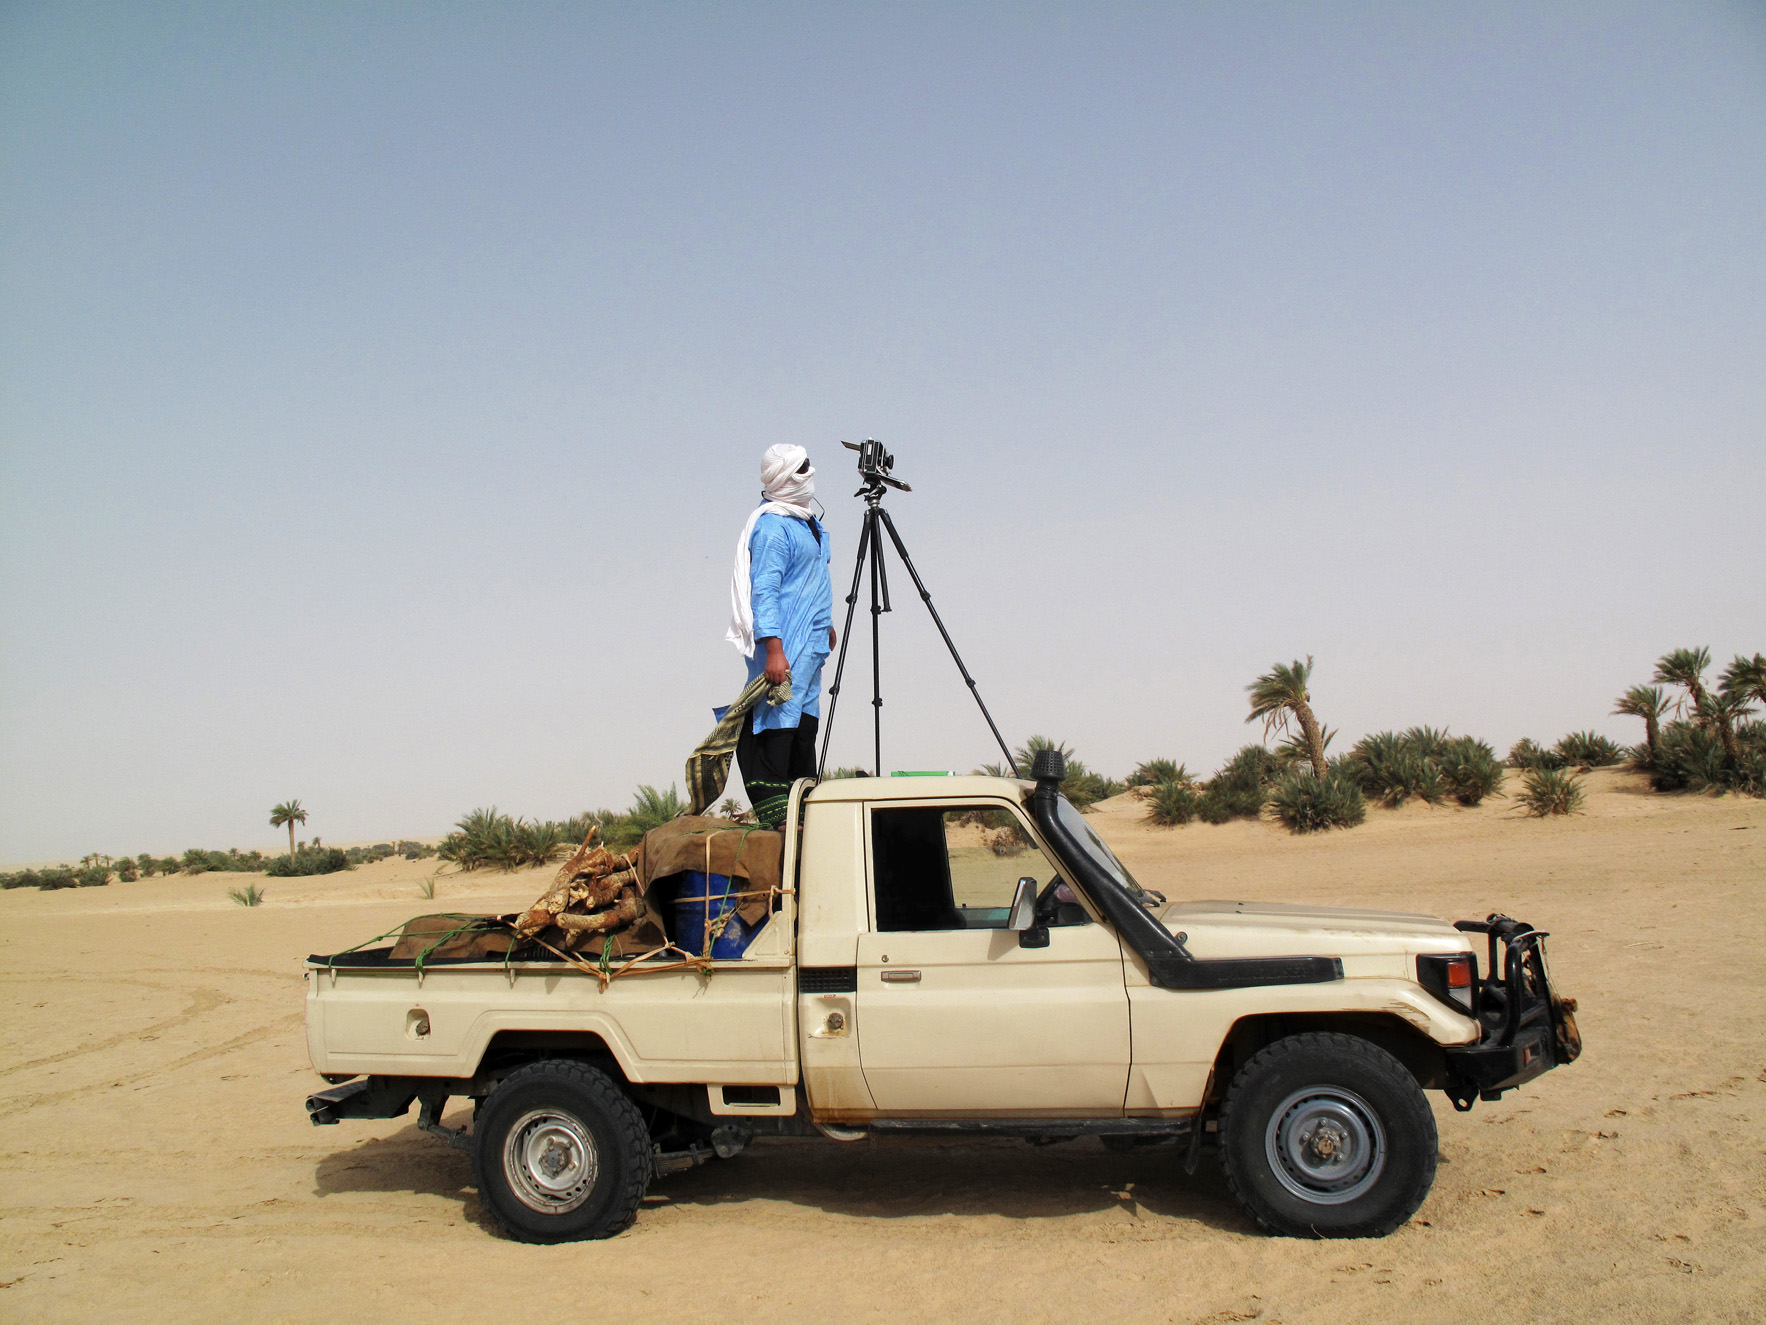 Photographer Philippe Dudouit working in Libya, 2015. (@philippedudouit @dynamicsofdust)